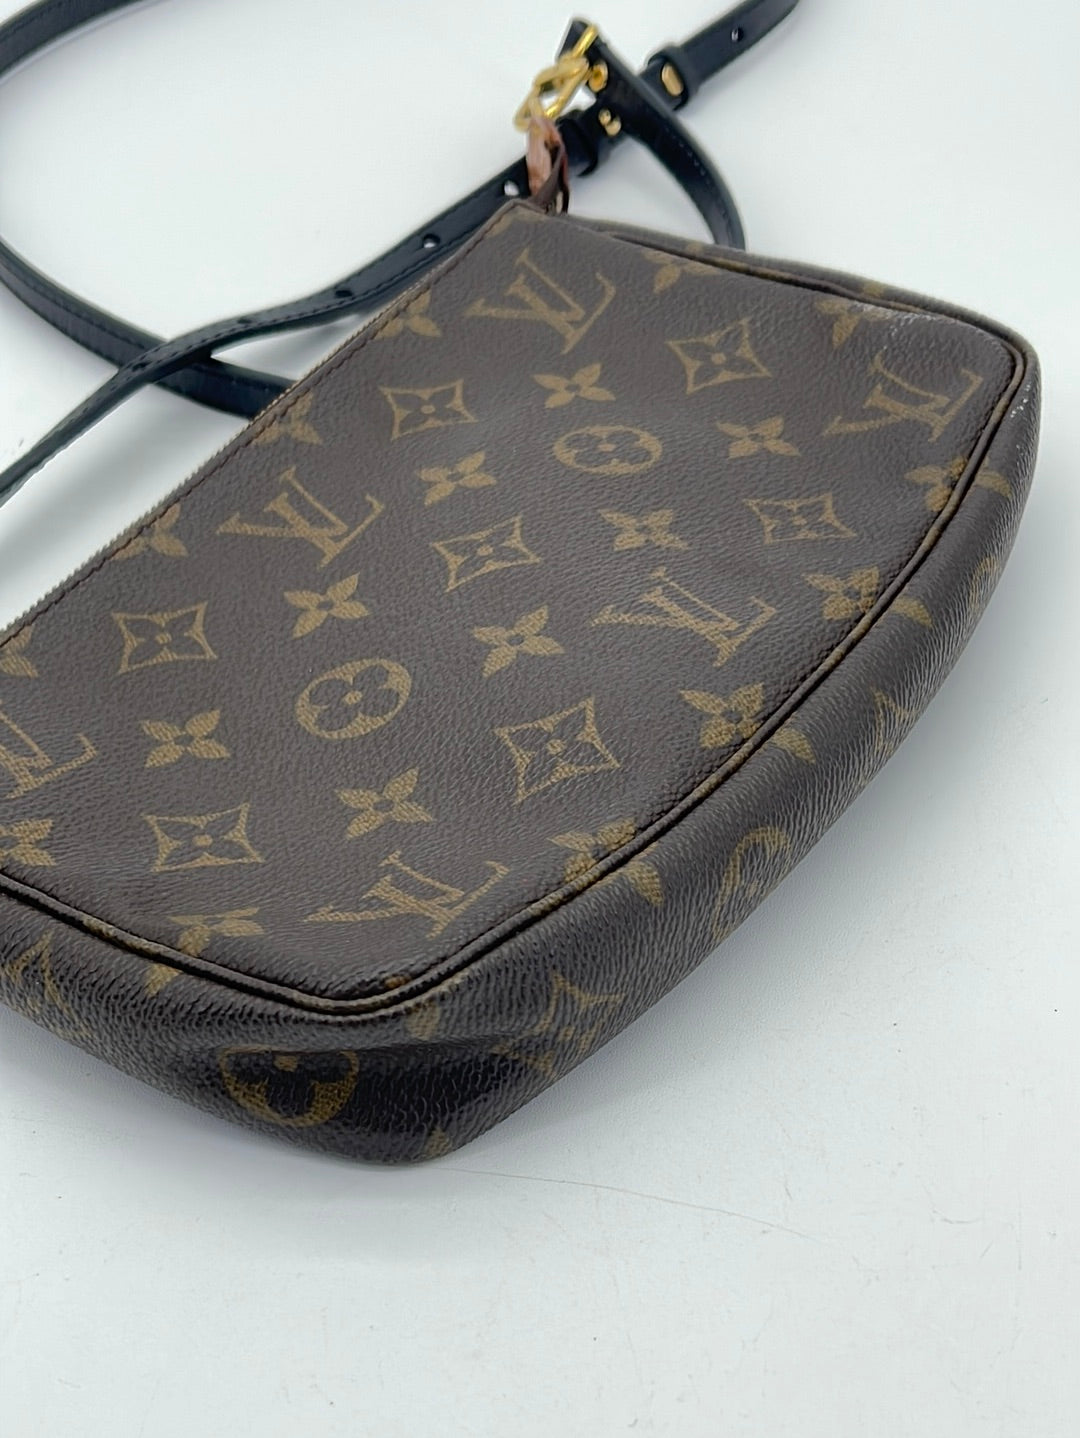 PRELOVED Louis Vuitton Monogram Accessories Pochette Bag 7K8XWTH 032924 P